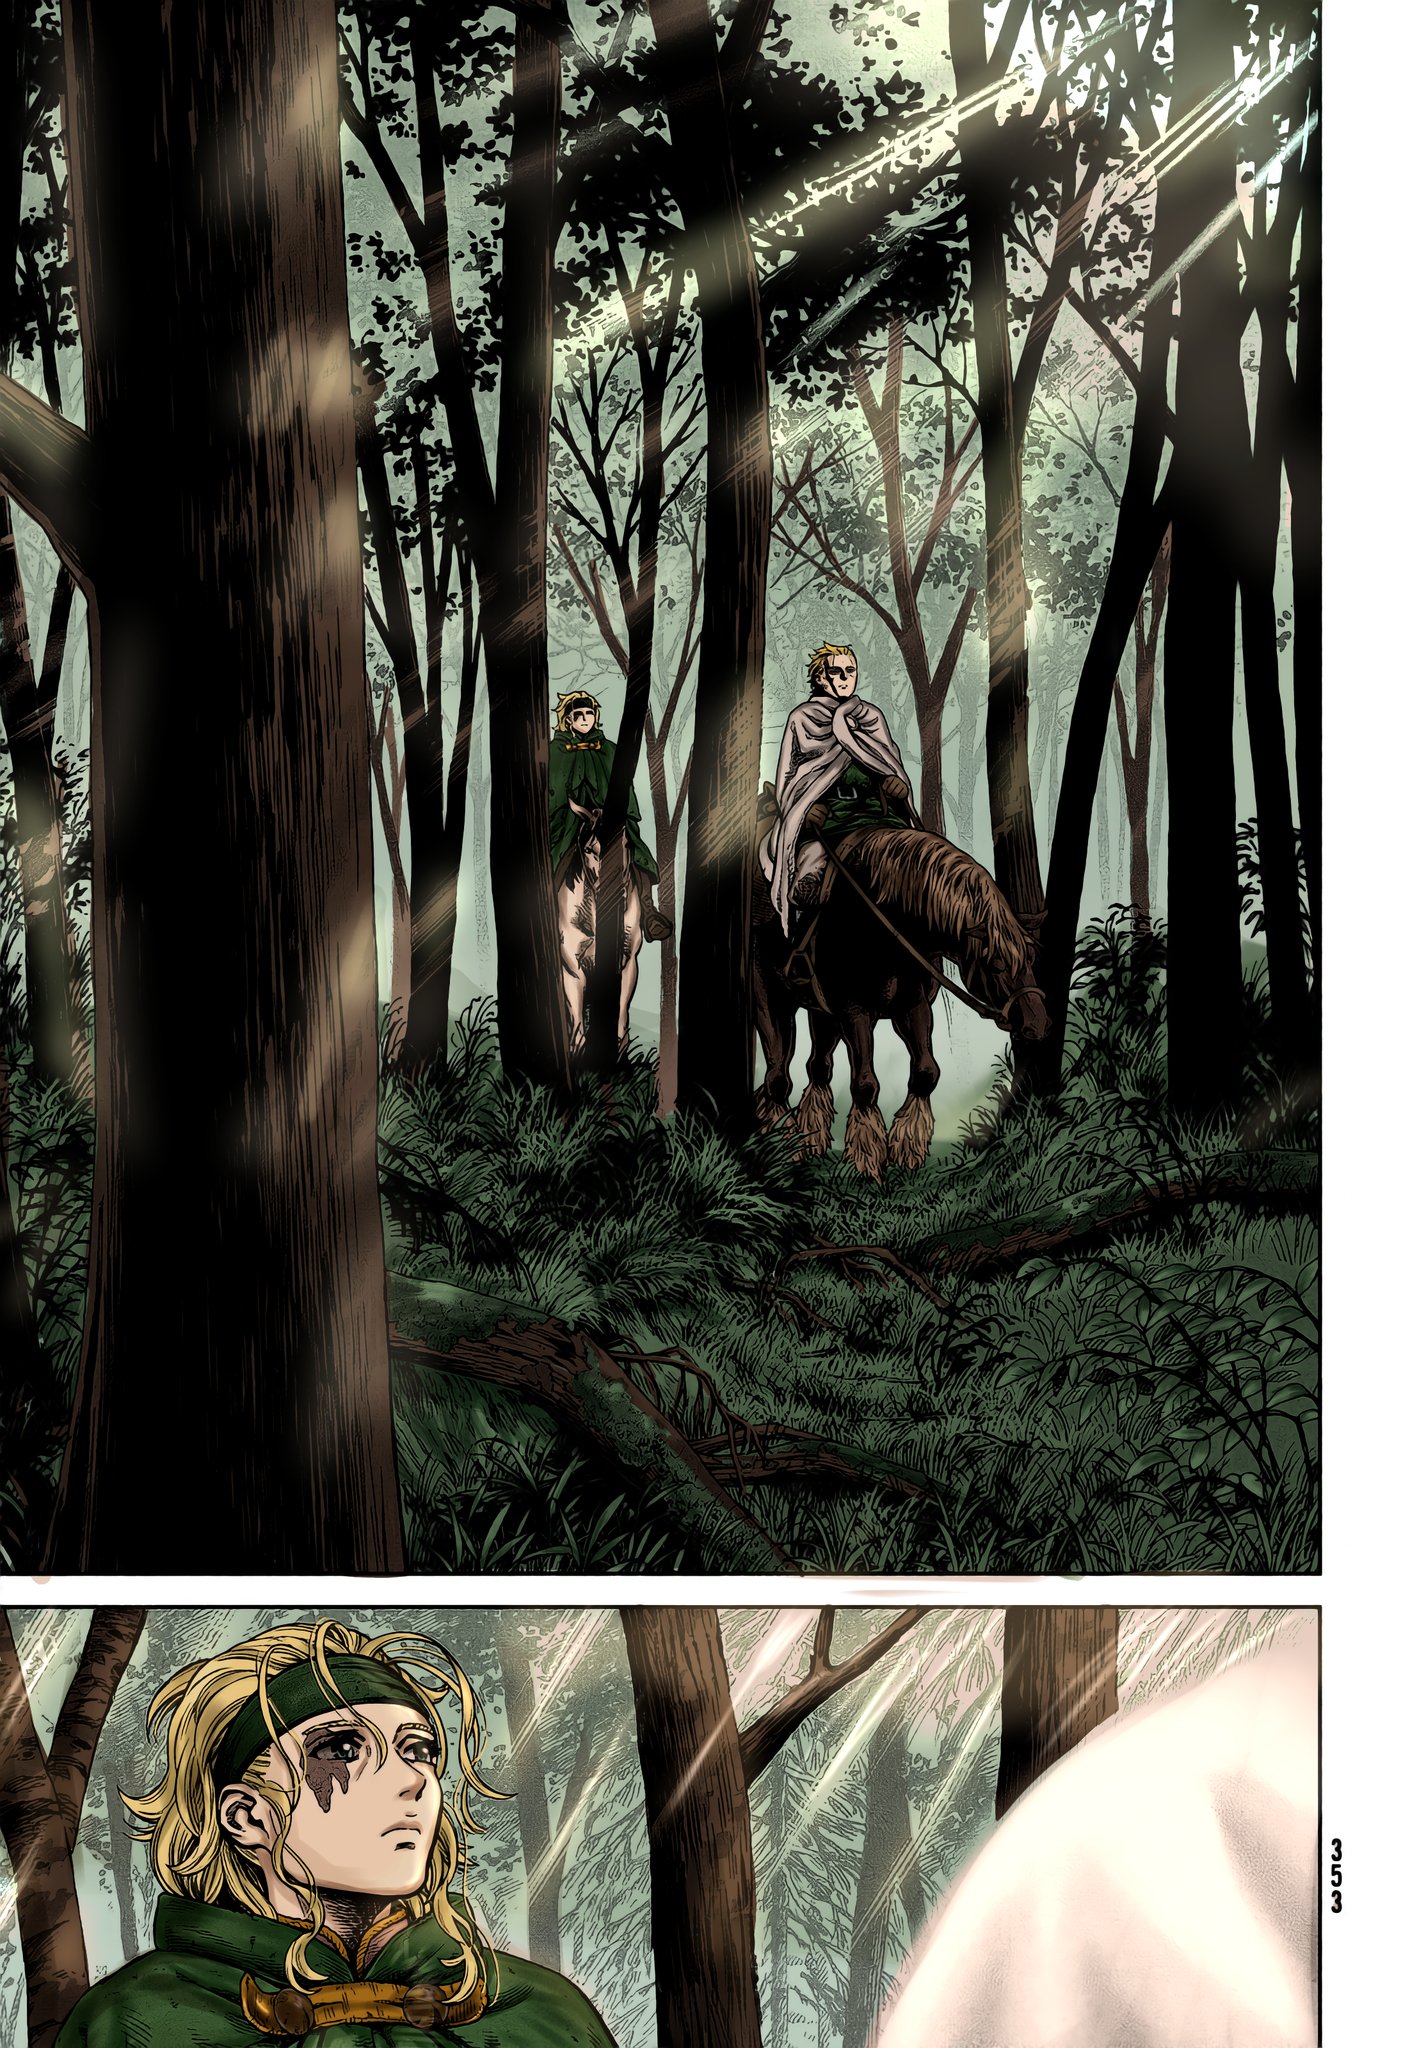 Knut RH on X: Cover of Vinland Saga, chapter 183 🌾✨. #VINLAND_SAGA  #Thorfinn #coloring  / X